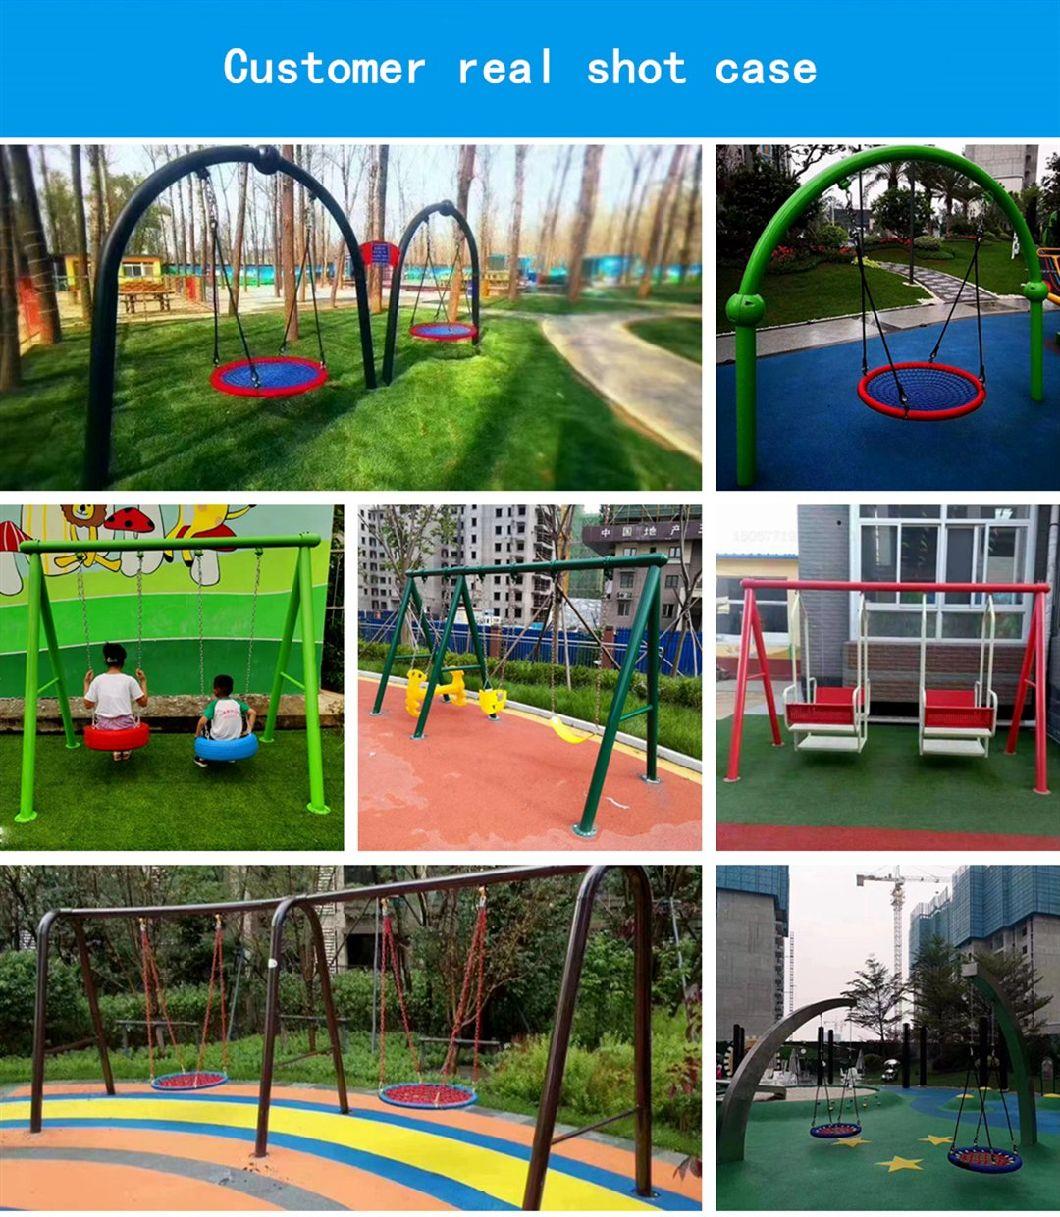 Kids Outdoor Playground Wooden Swing Set Park Equipment Yq93